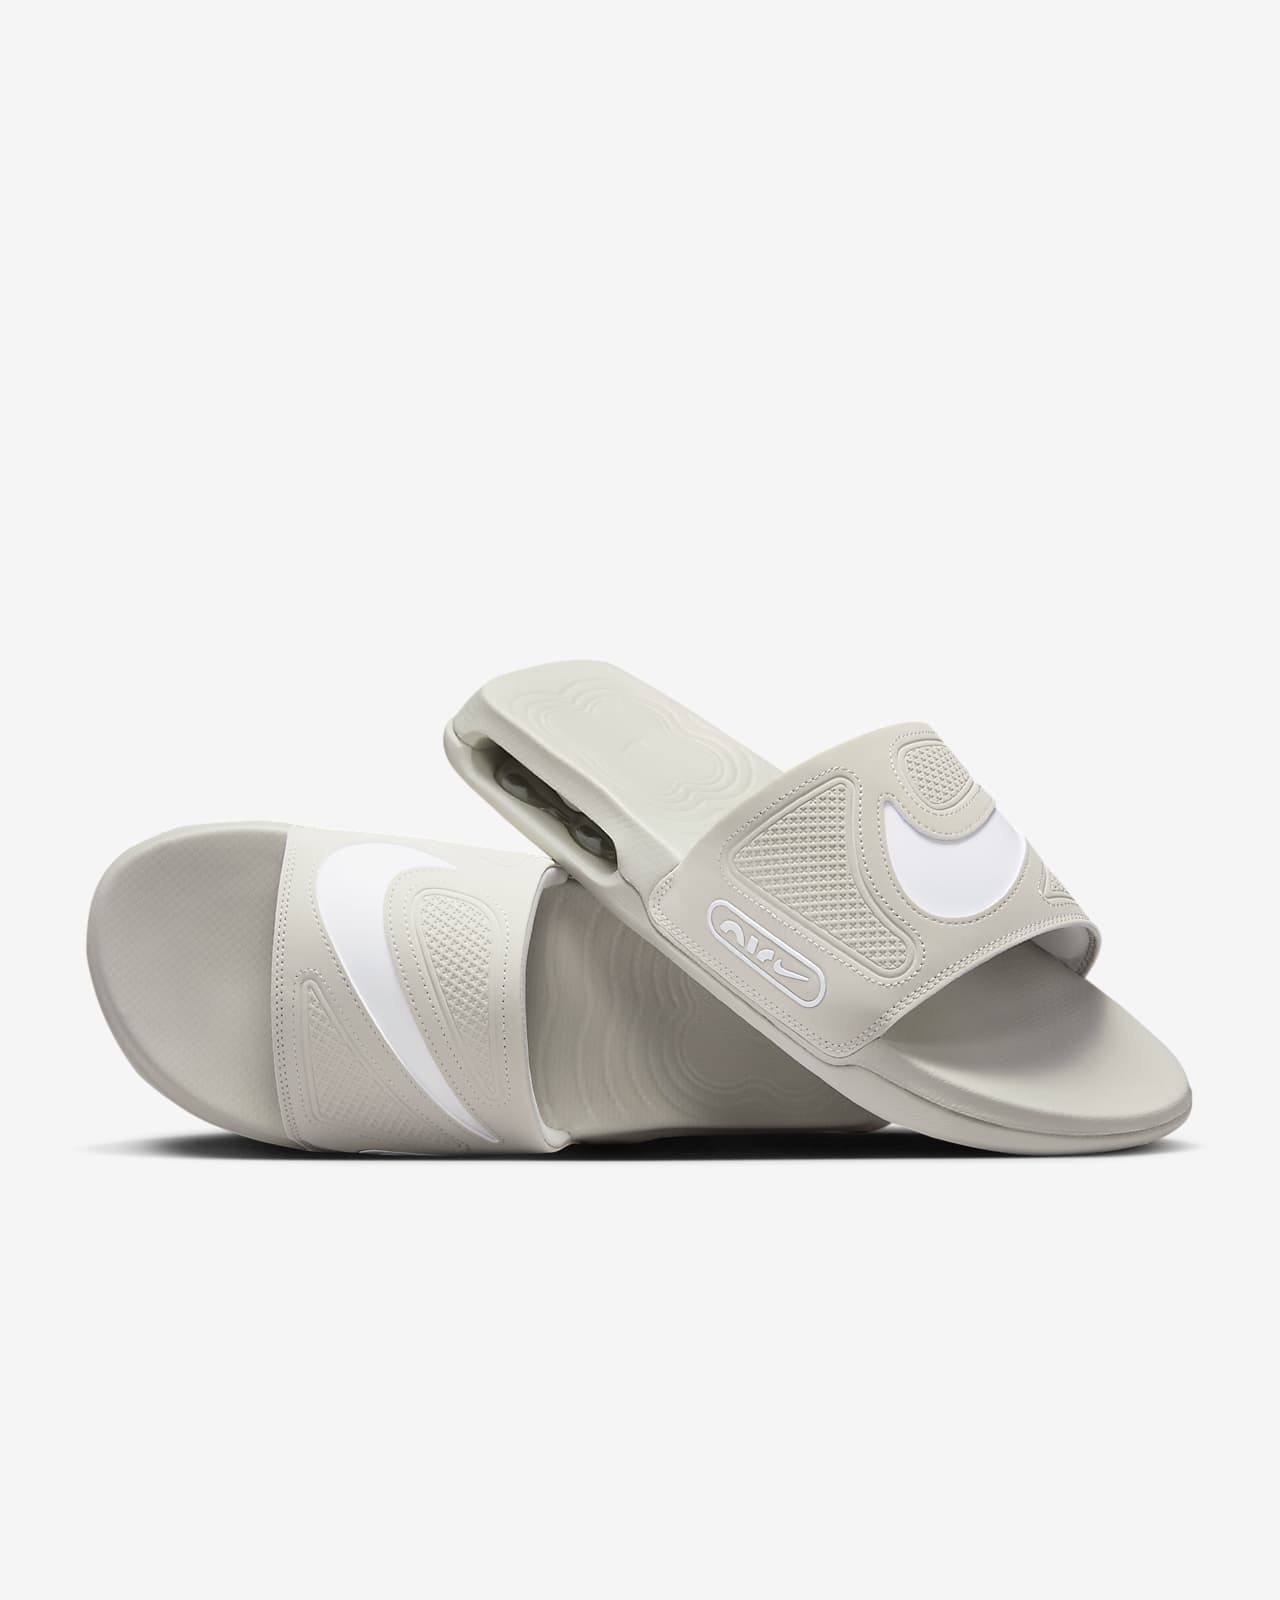 Sliders, Sandals & Flip-Flops. Nike IL